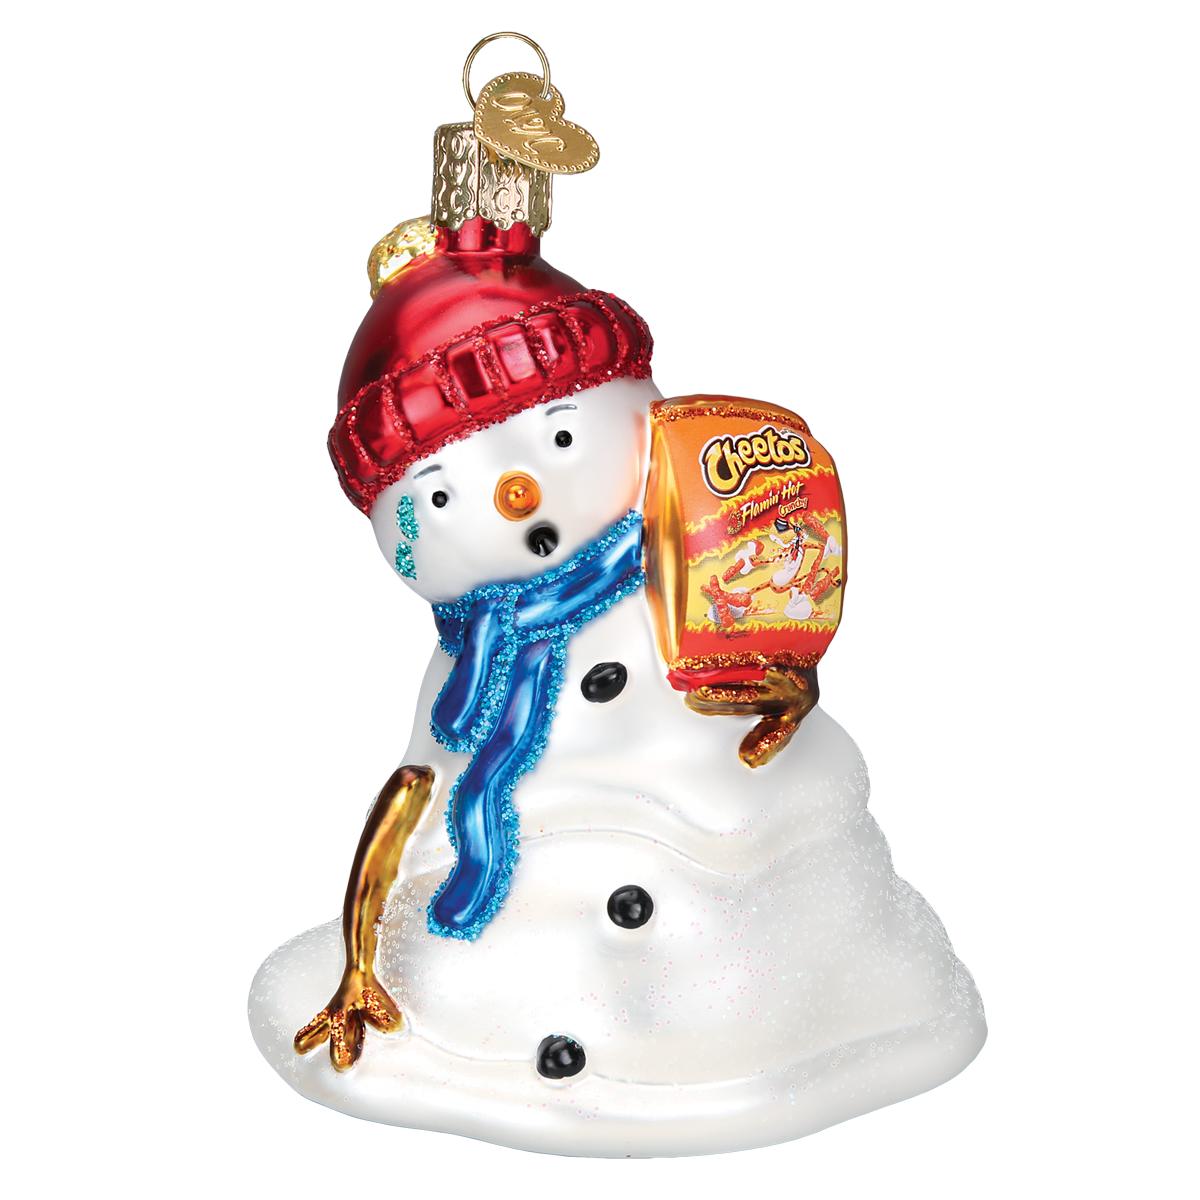 Old World Christmas Flamin' Hot Cheetos Snowman Ornament    